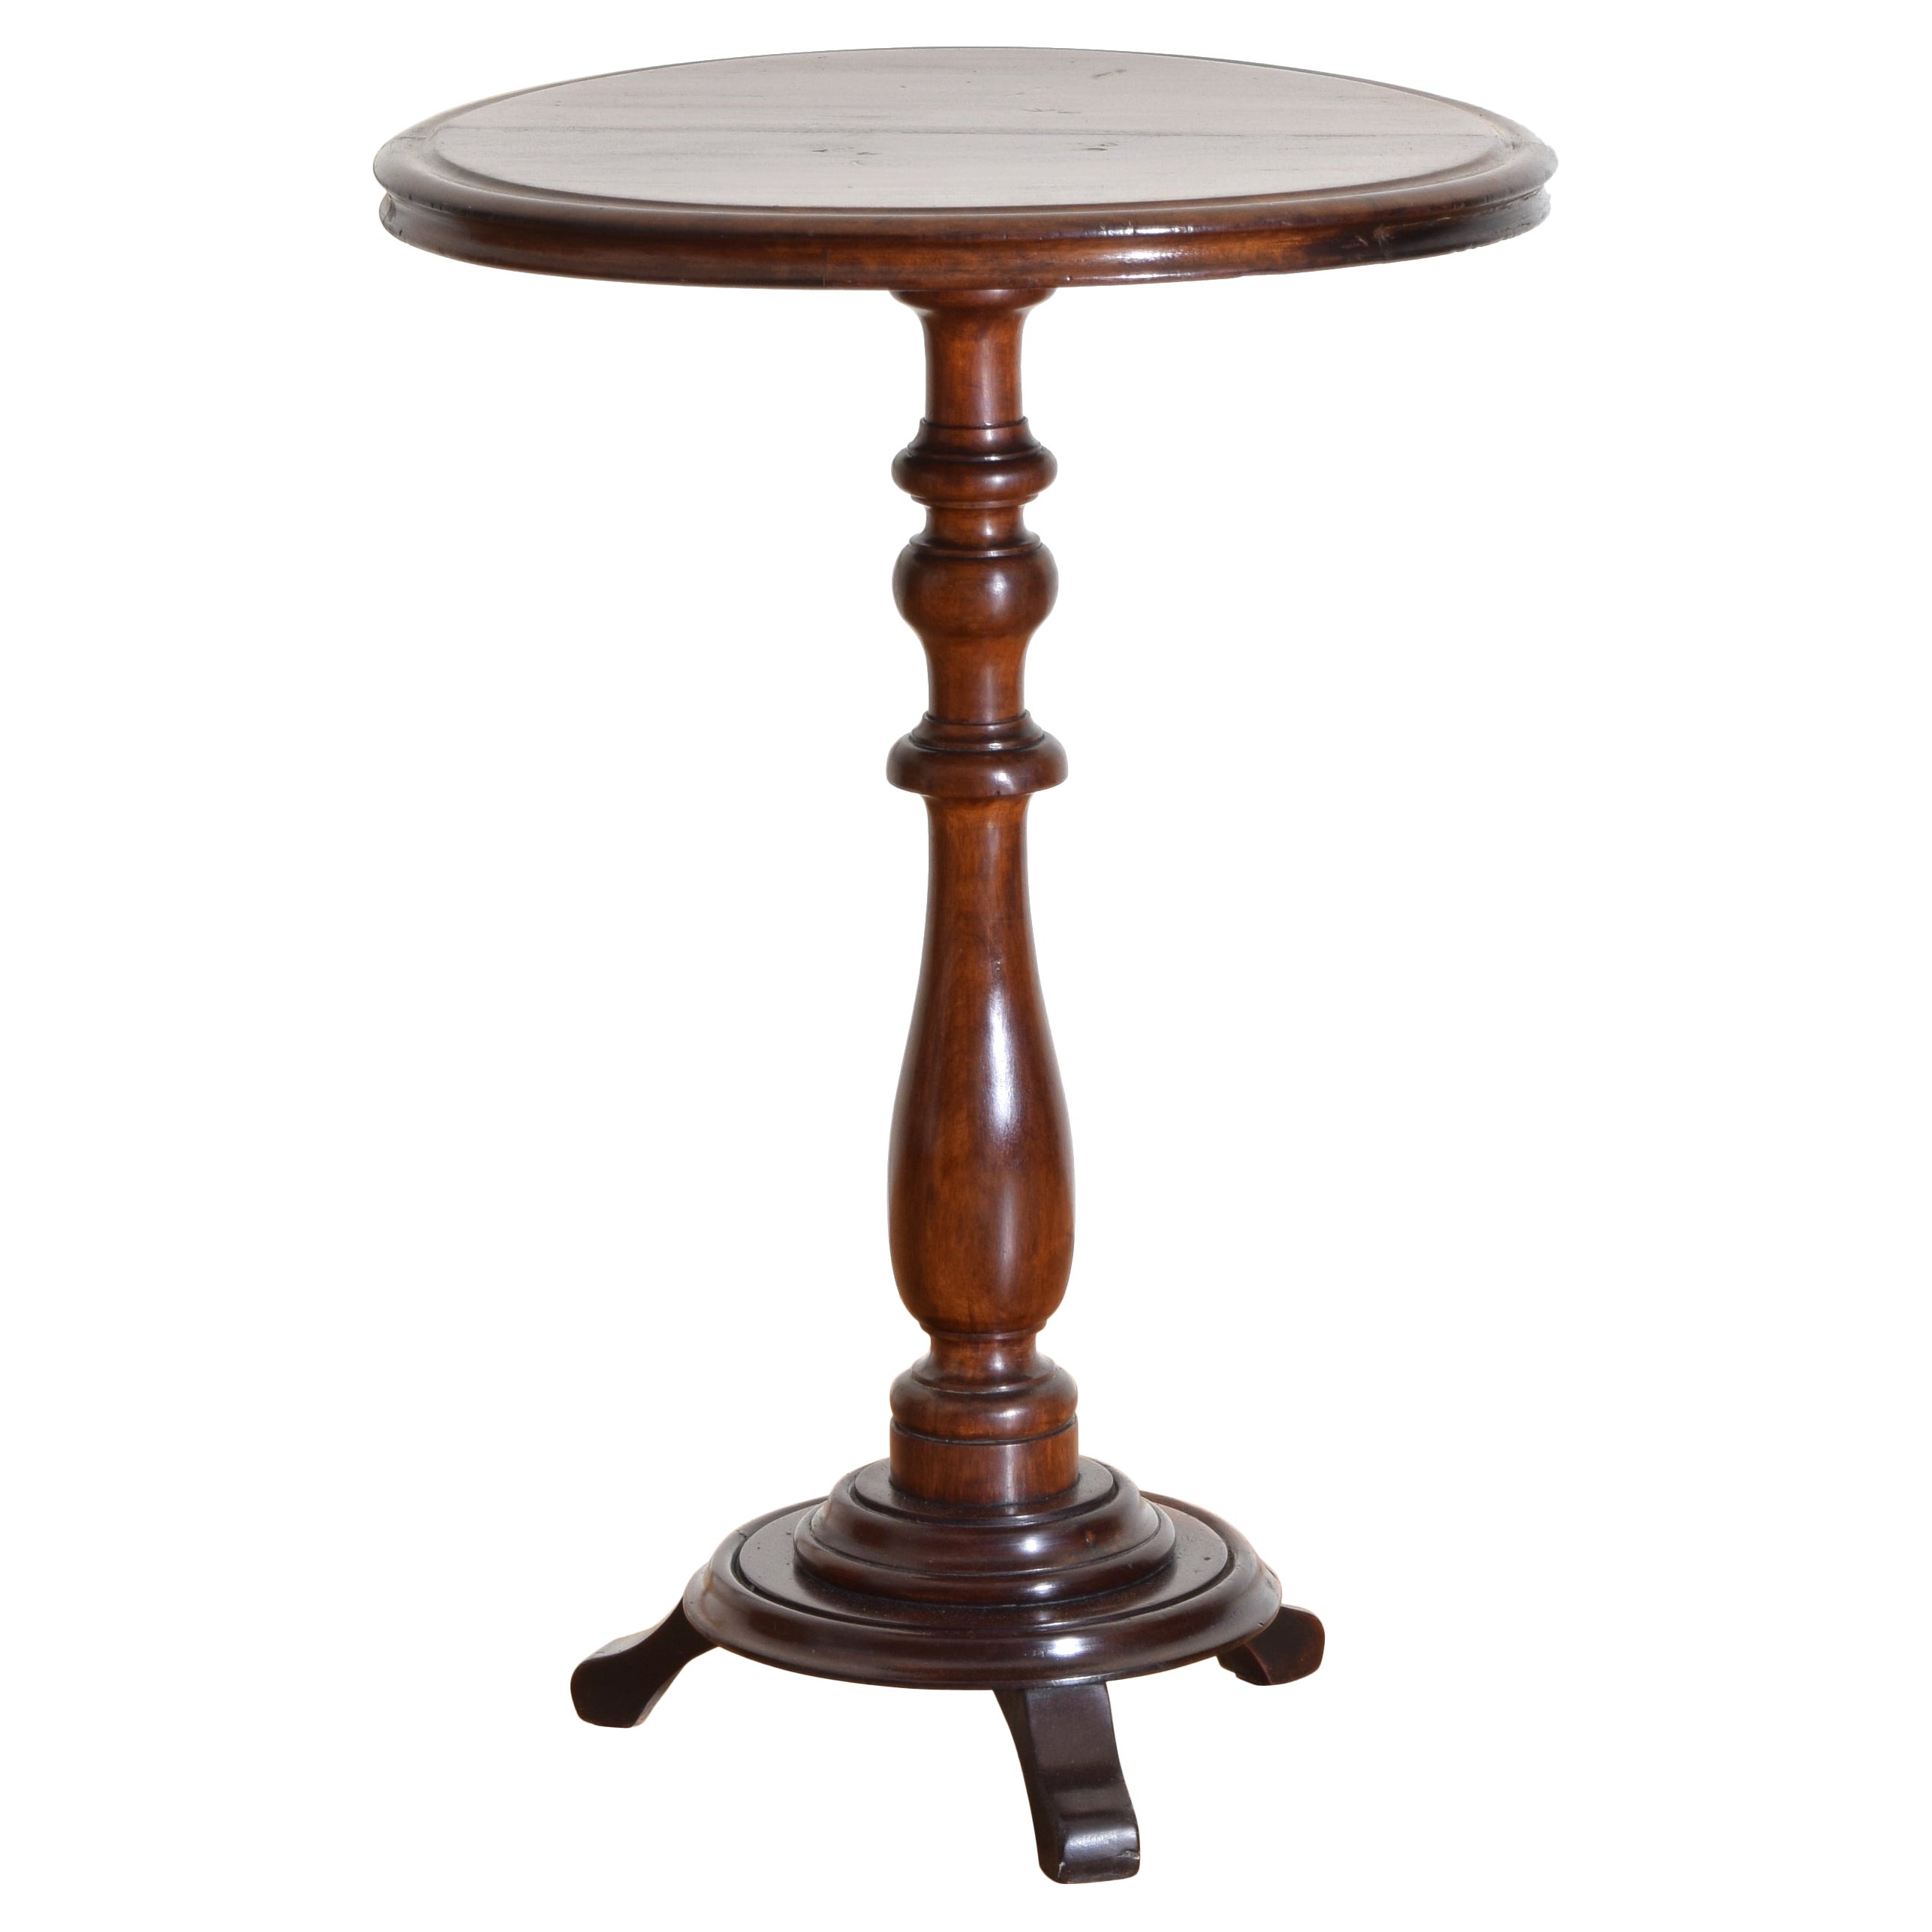 Italian Neoclassic Turned and Shaped Walnut Circular Table, ca. 1835